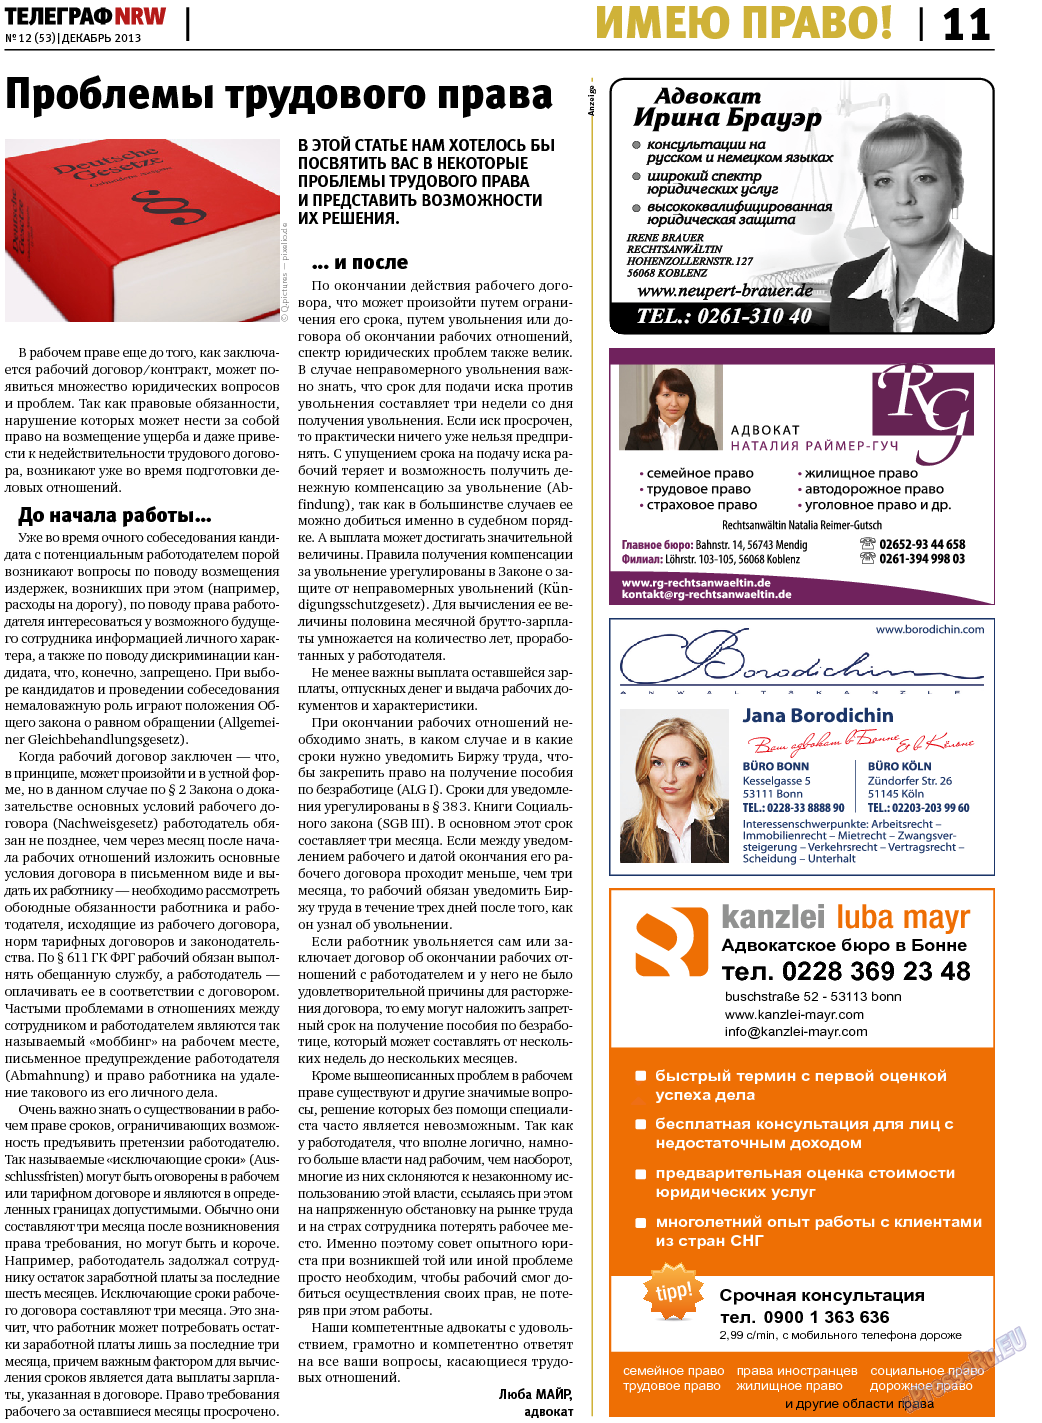 Телеграф NRW, газета. 2013 №12 стр.11